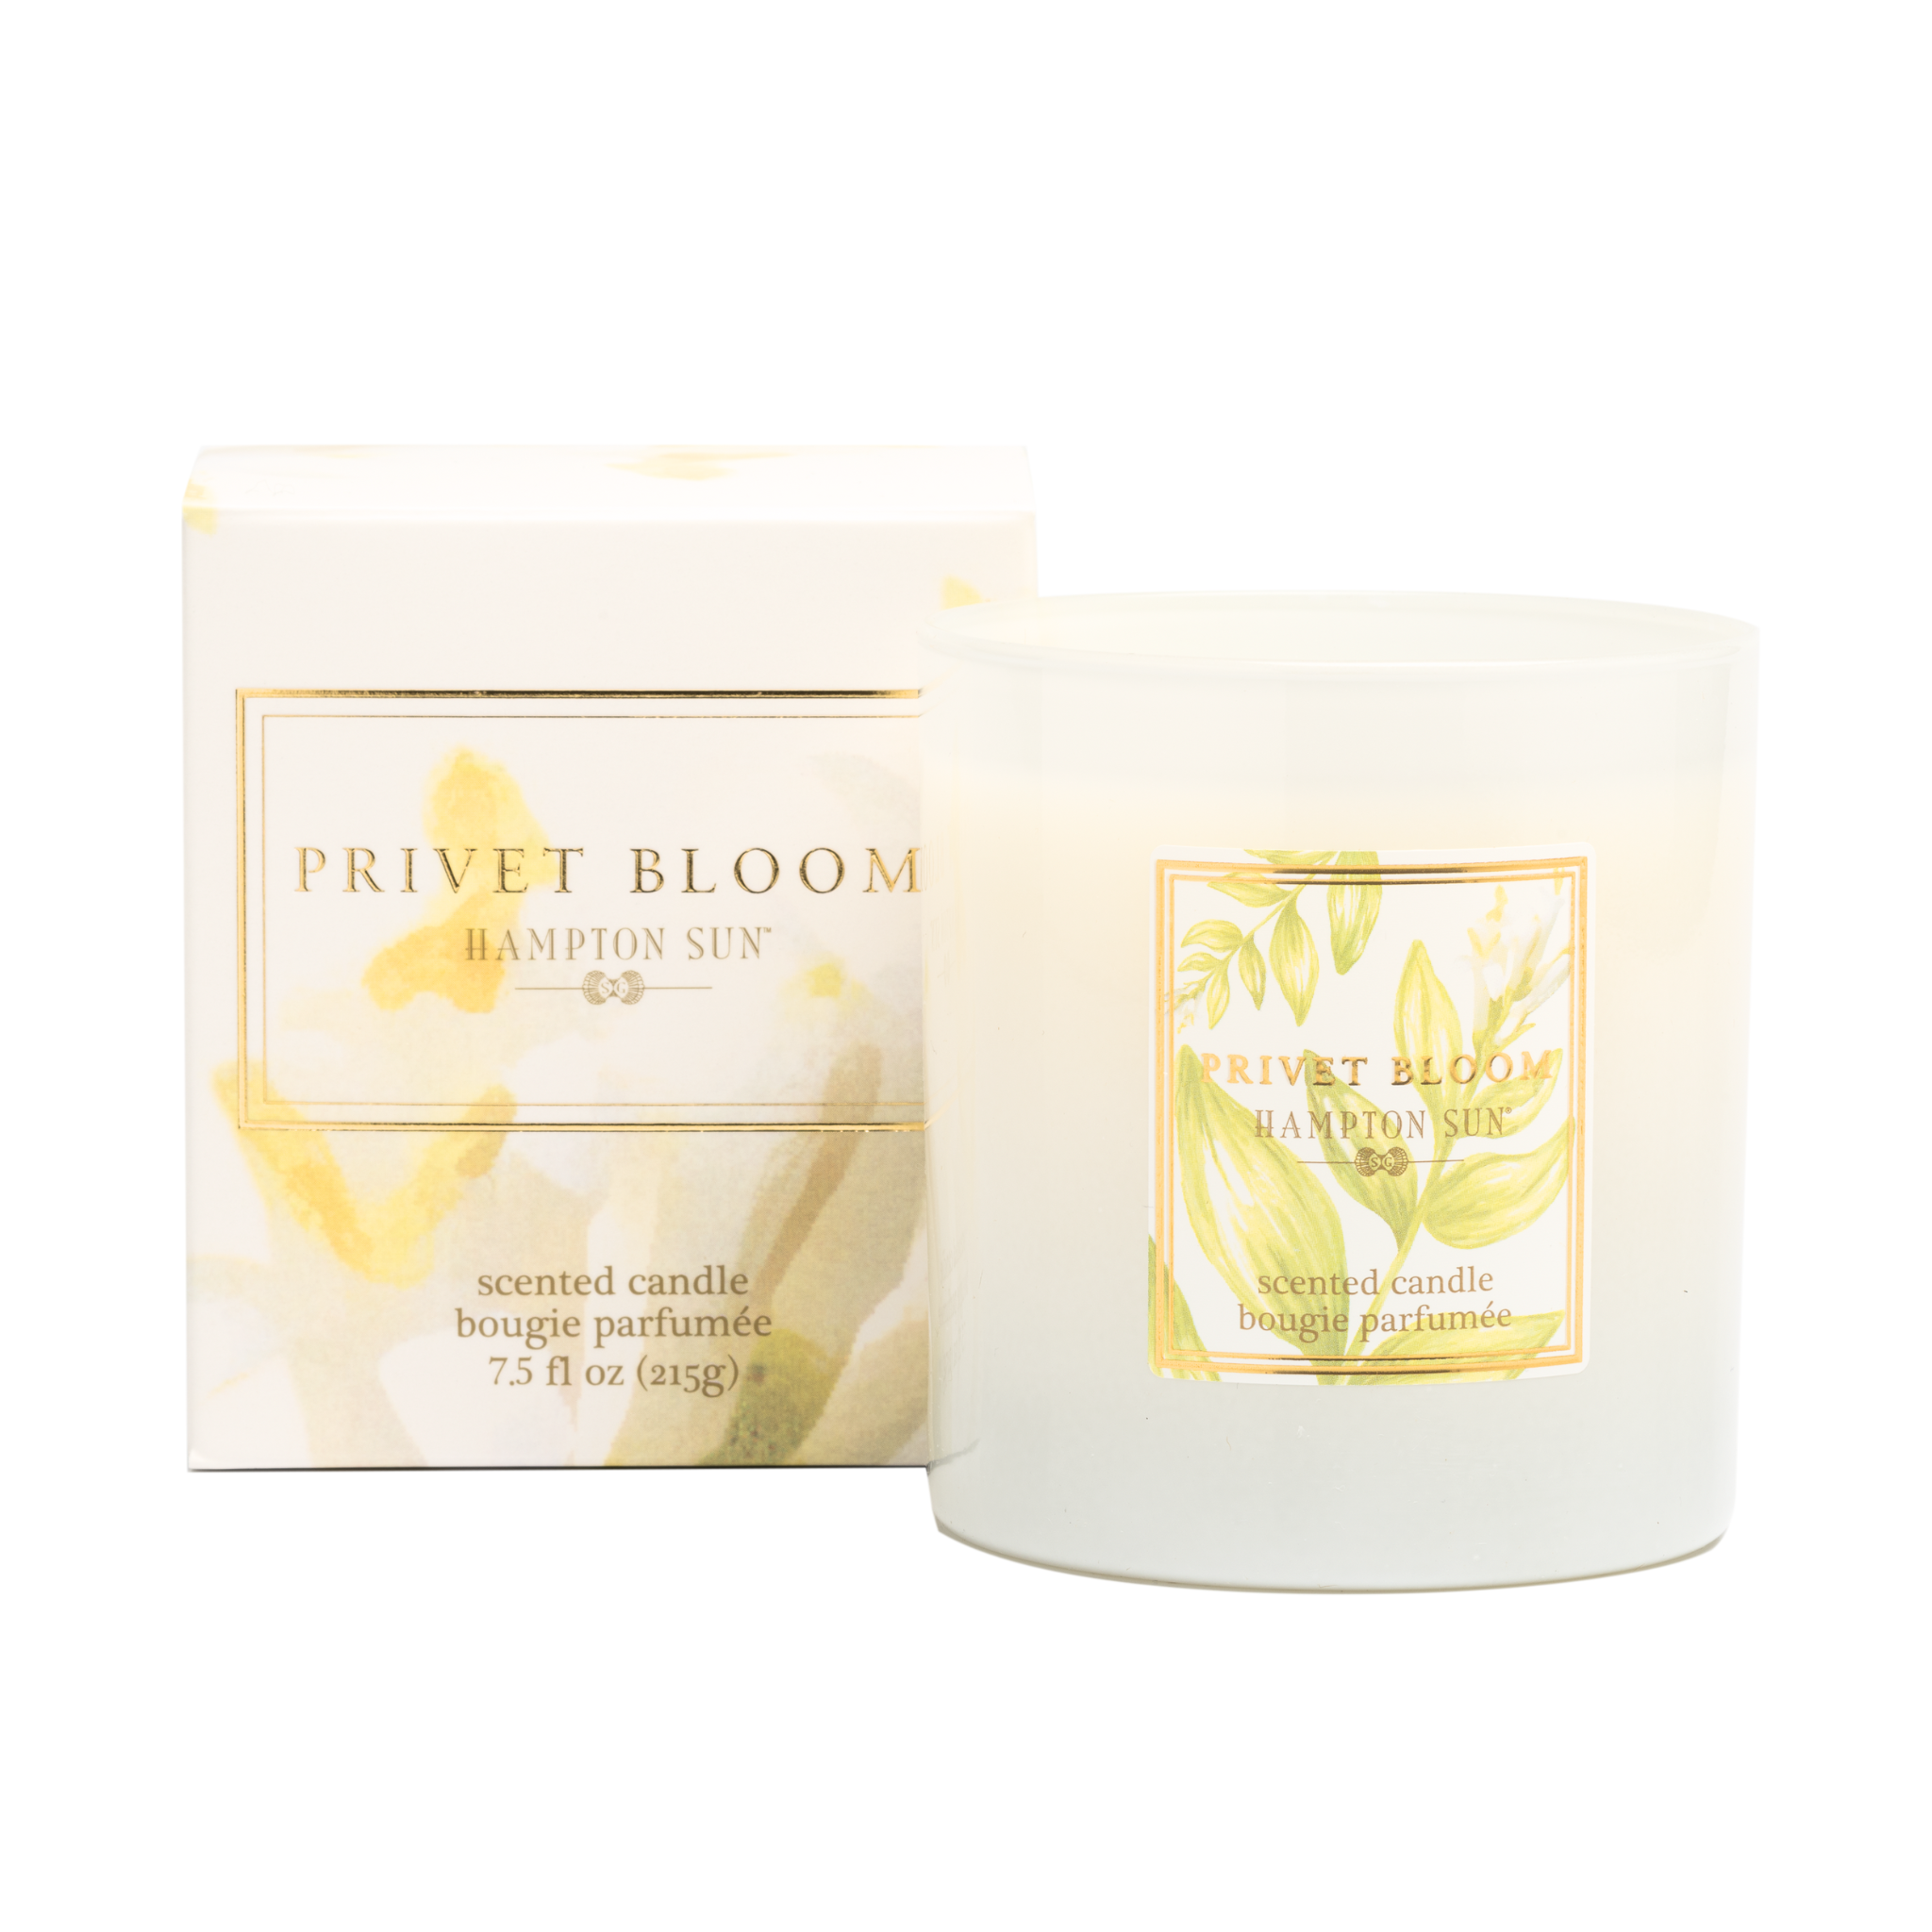 Privet Bloom Candle